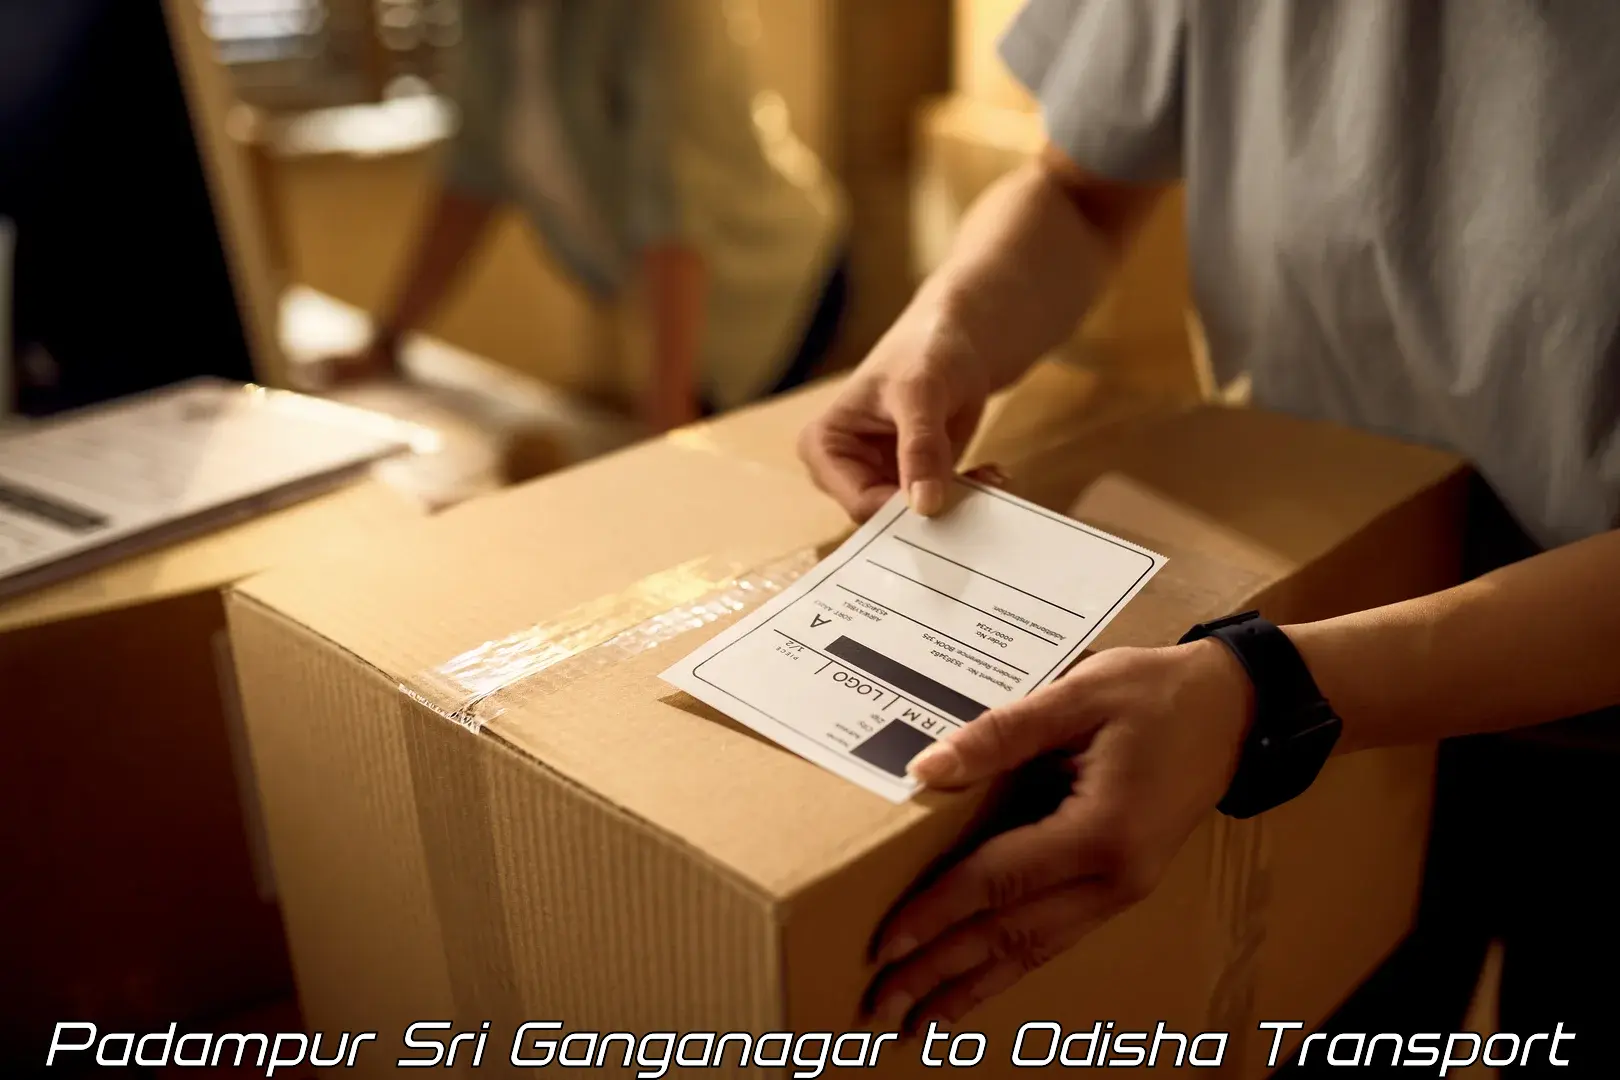 Goods delivery service Padampur Sri Ganganagar to Patkura